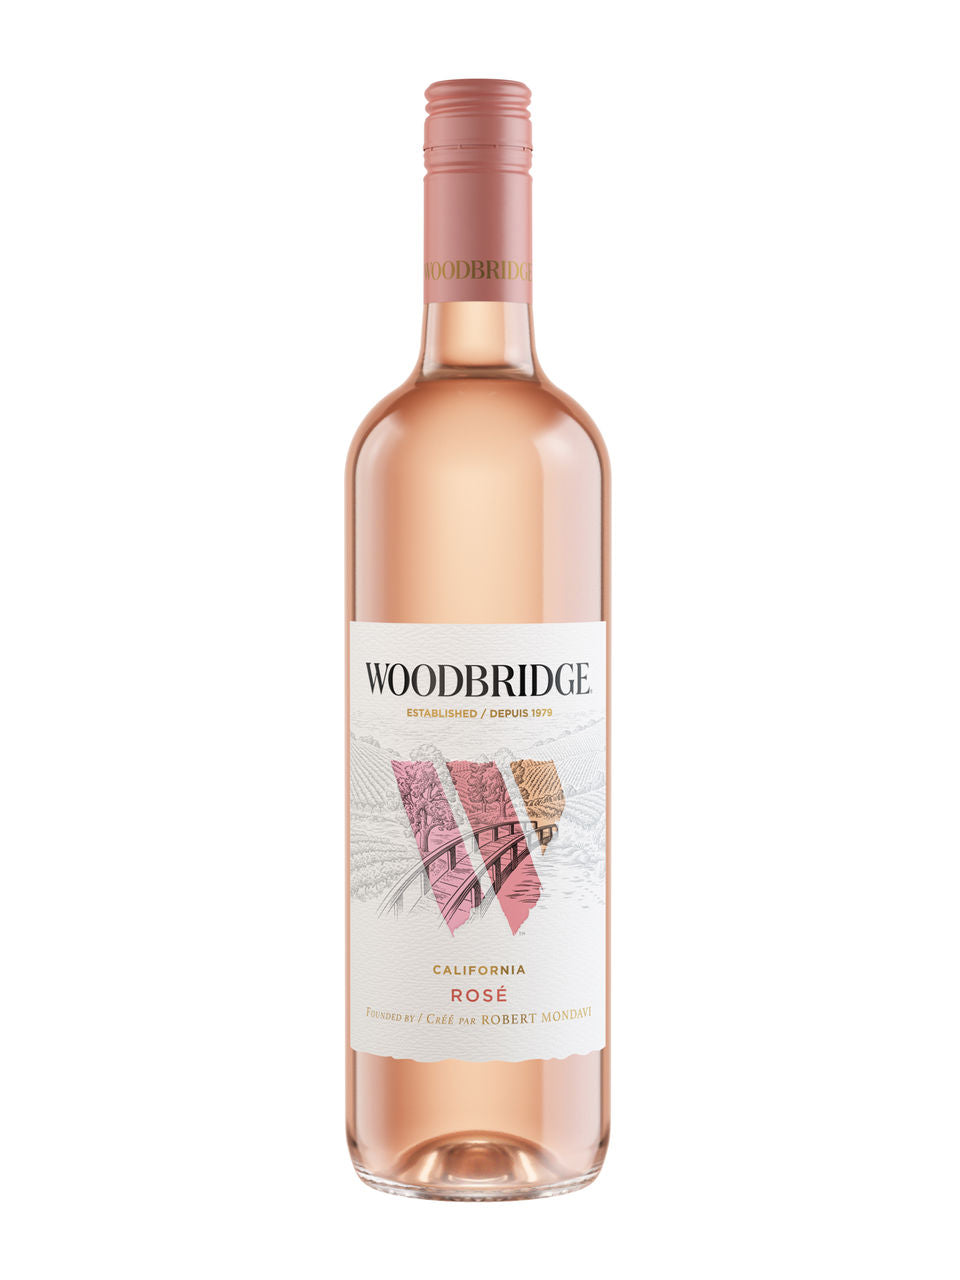 Woodbridge by Robert Mondavi Rosé 750 ml bottle